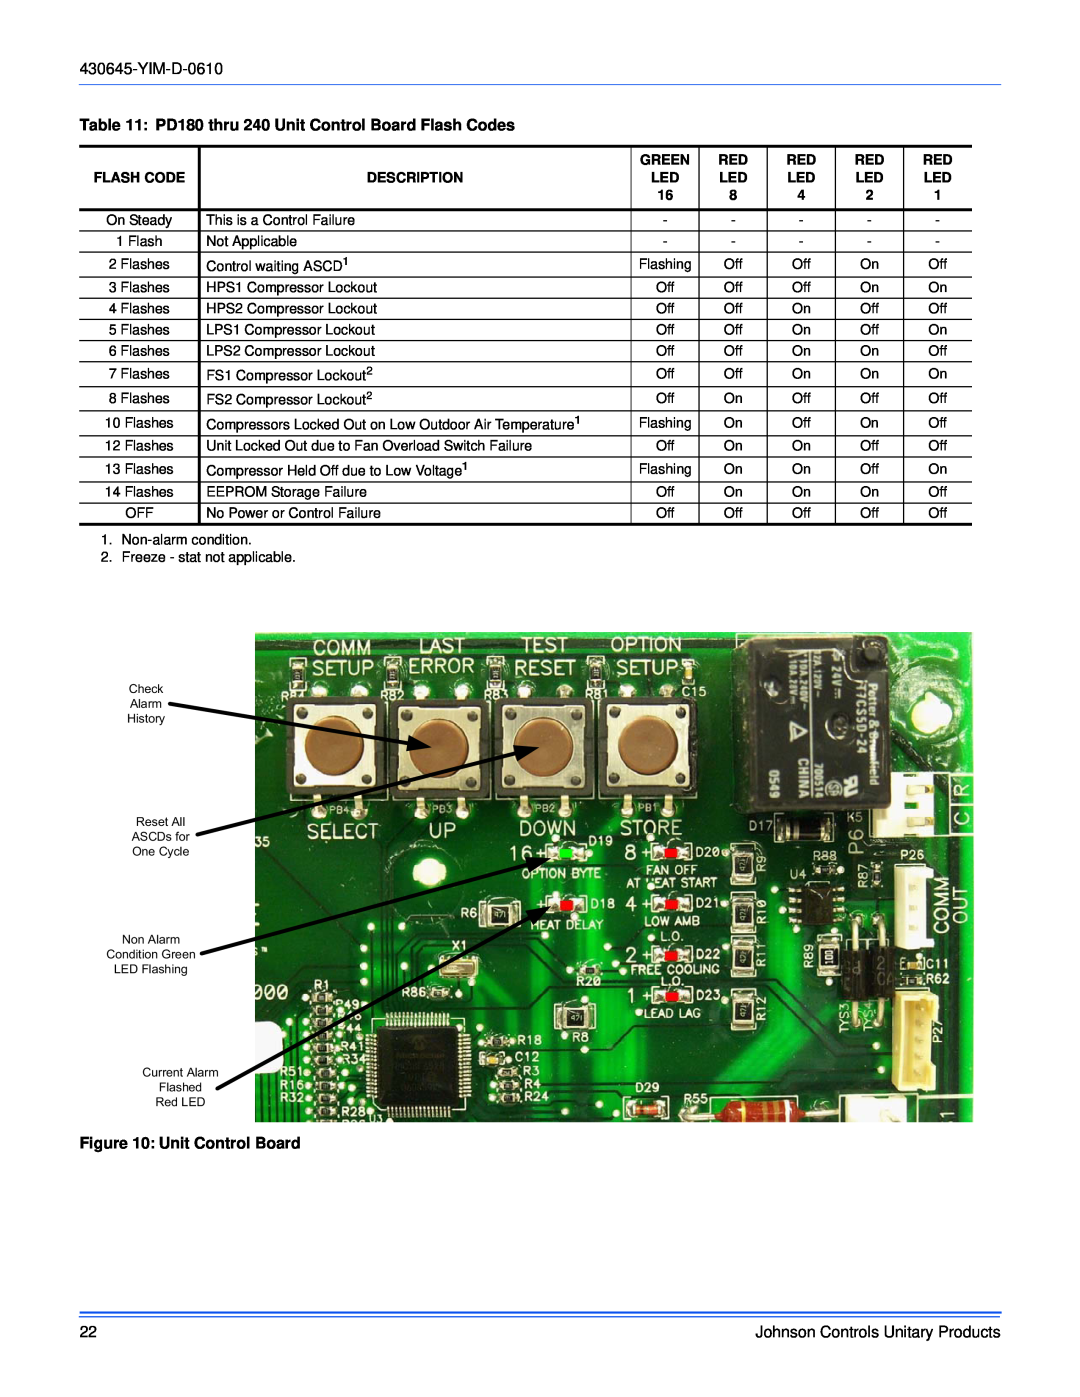 Johnson Controls PD 180 THRU 240, PC090 THRU 240 dimensions Unit Control Board, Green, Flash Code, Description 